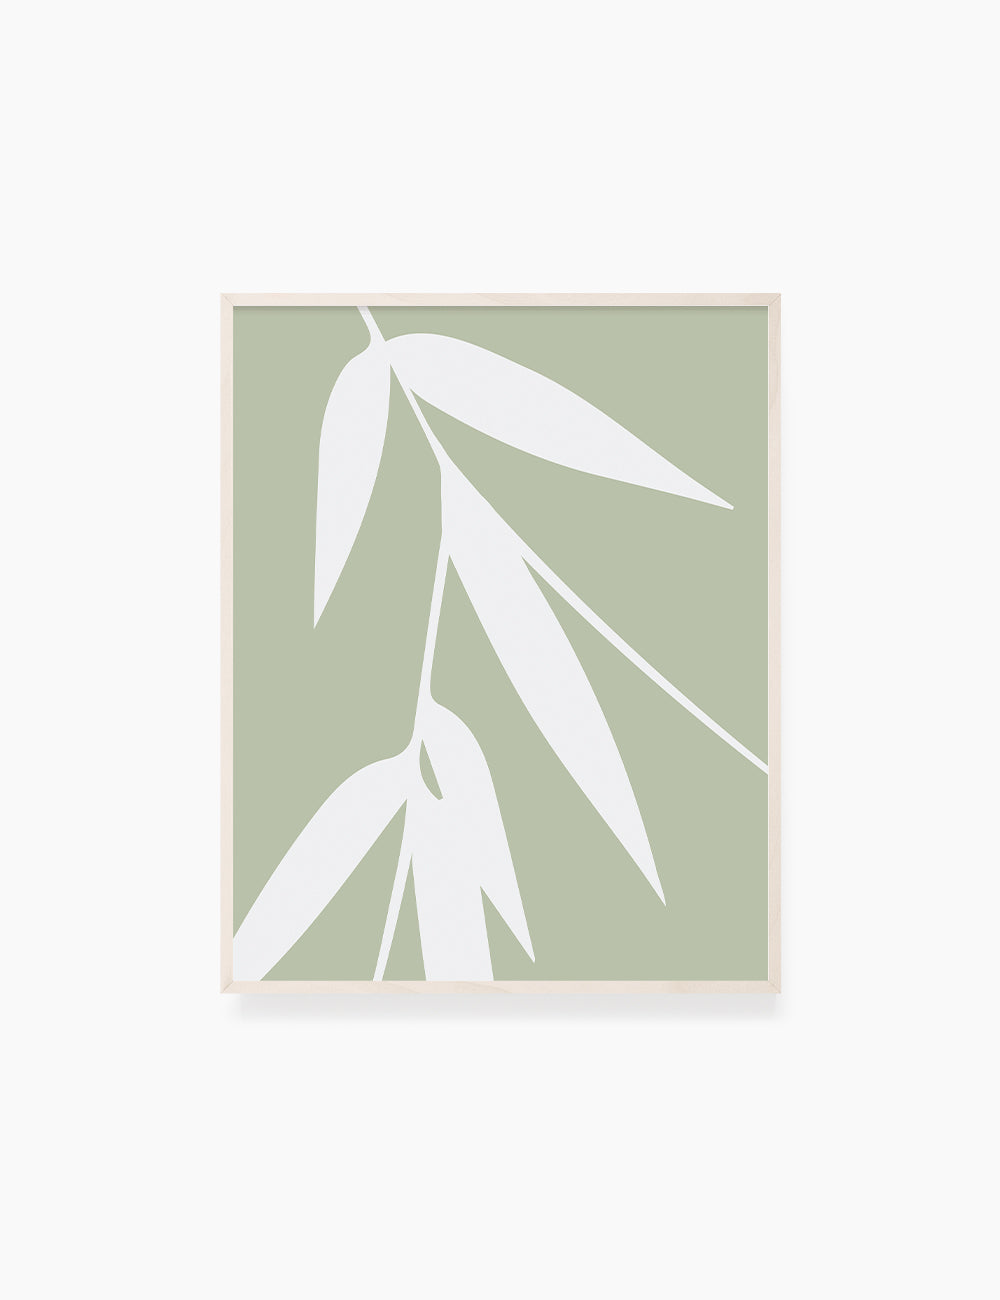 BAMBOO LEAVES. MINIMALIST BOTANICAL BOHO ART. GREEN. Minimal Aesthetic. Clean Design. Printable Wall Art Illustration. - PAPER MOON Art & Design